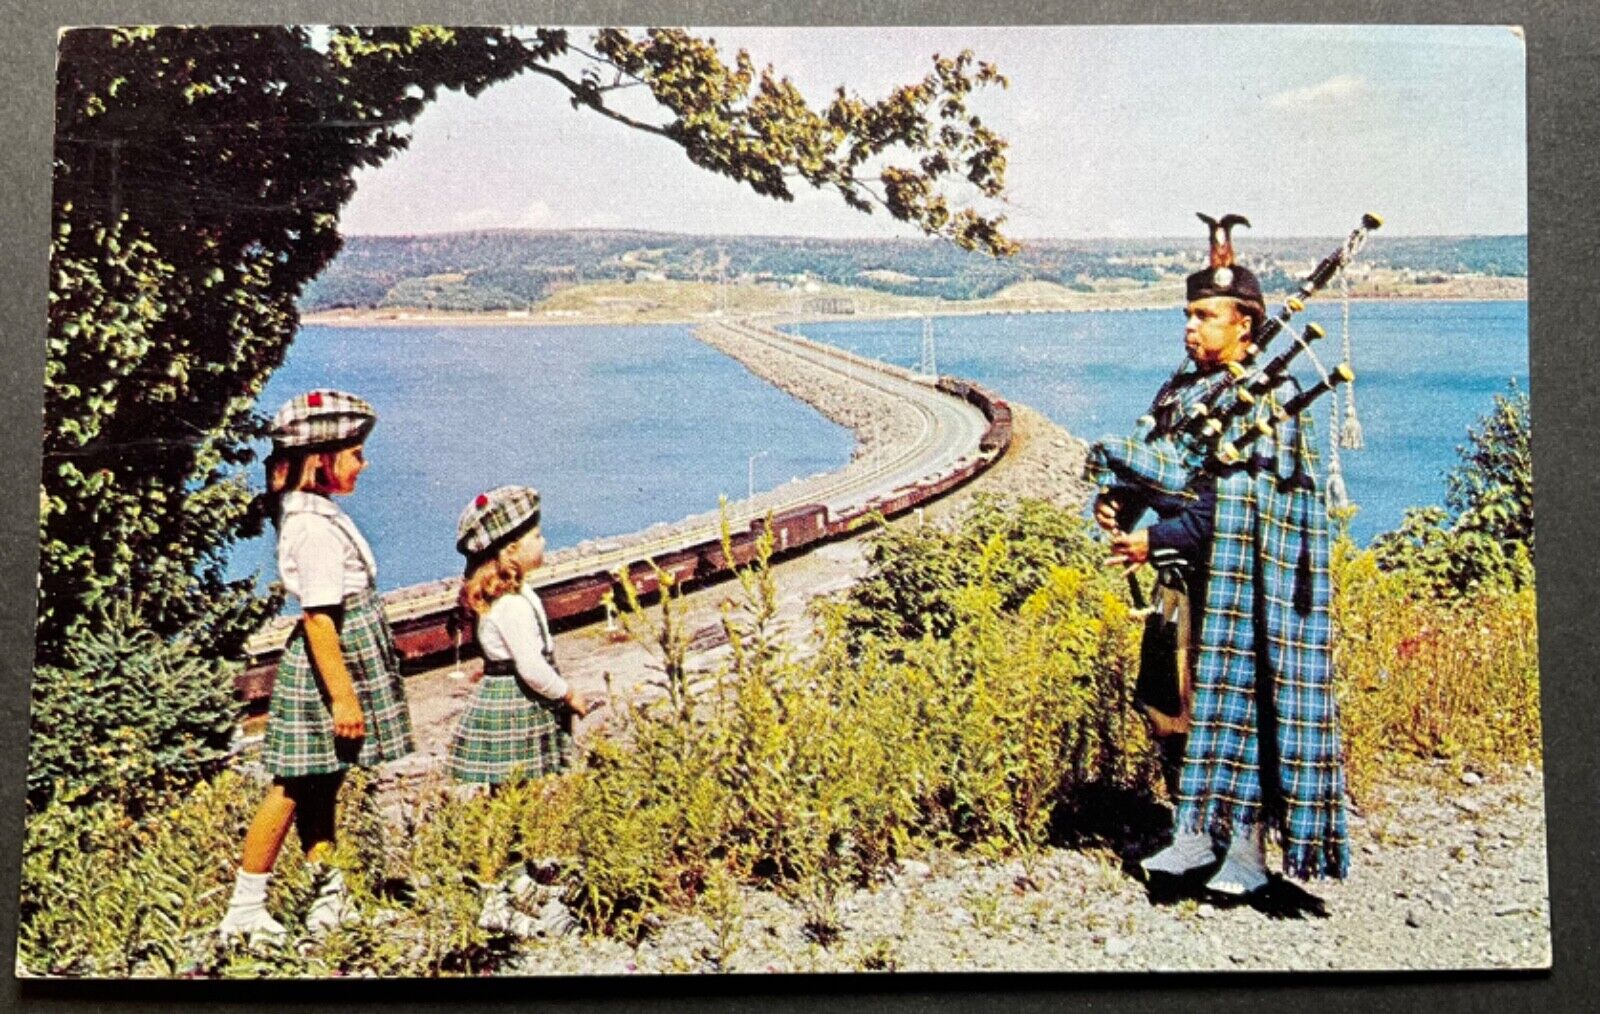 Halifax Nova Scotia Canada Postcard Deepest Causeway in the World